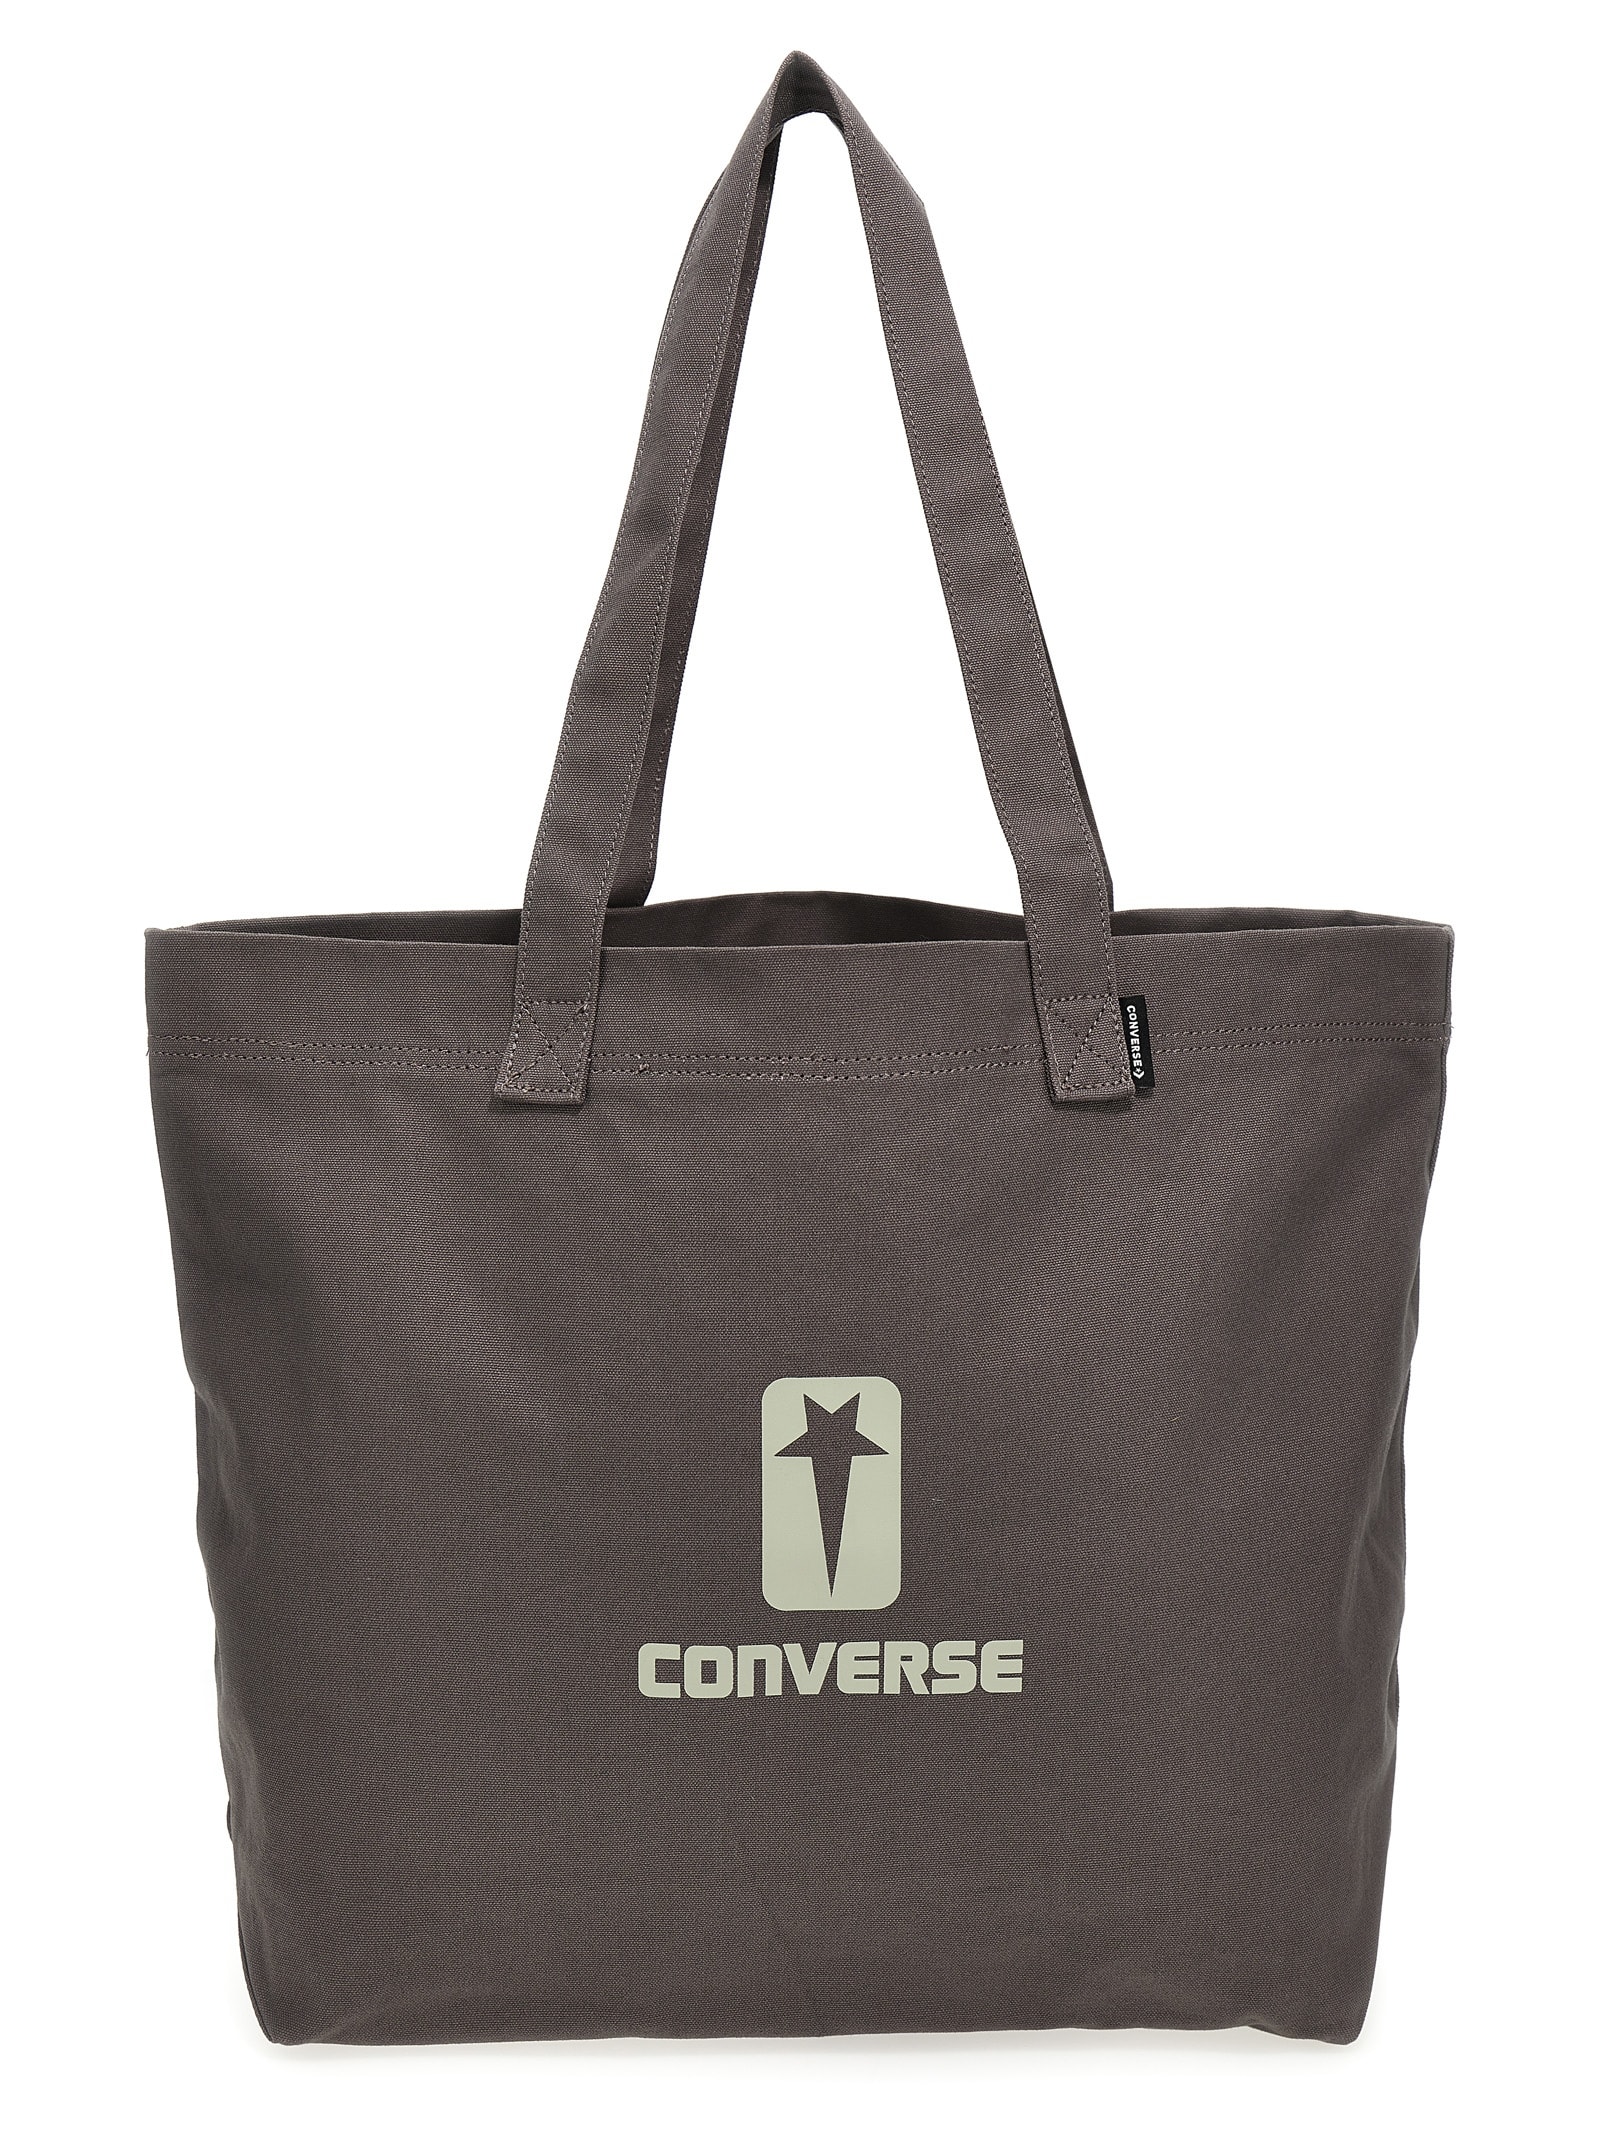 Drkshdw Drkshw X Converse Shopping Shopper Tote Bag Gray